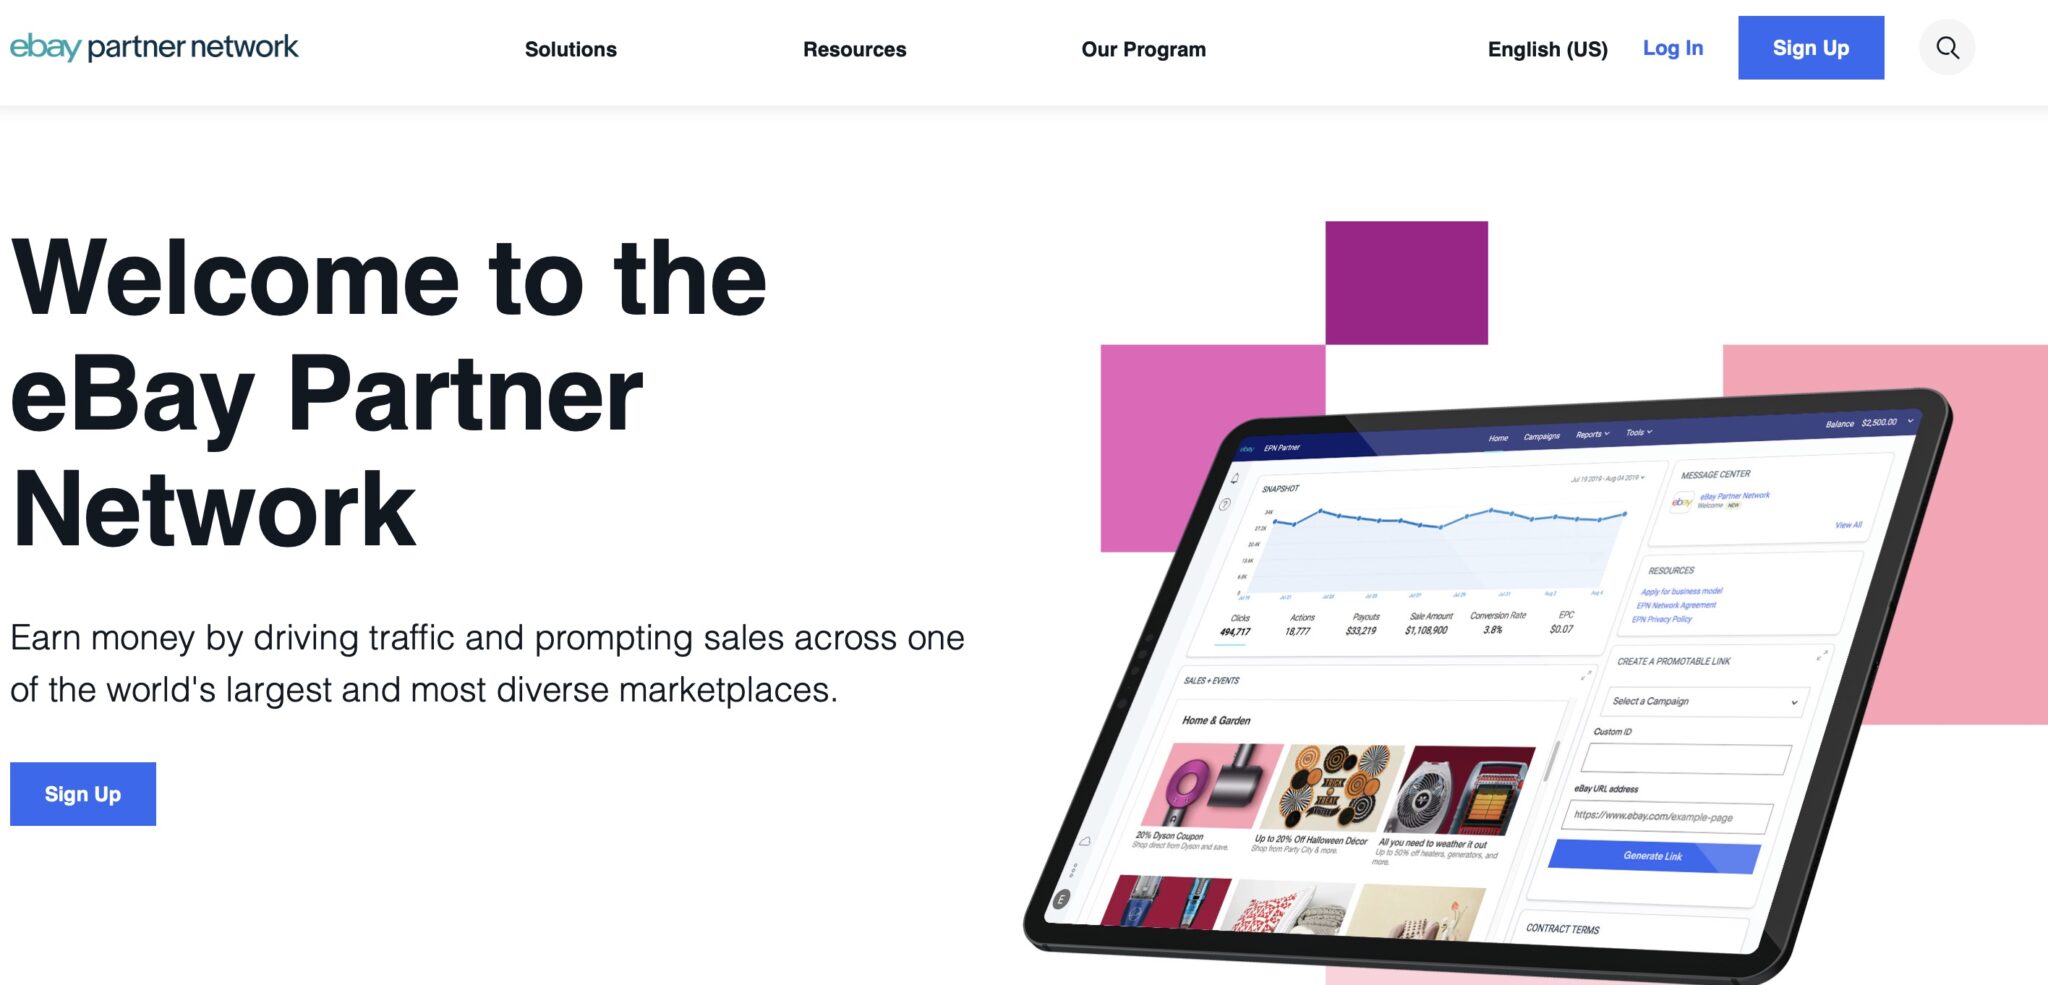 ebay partner network homepage